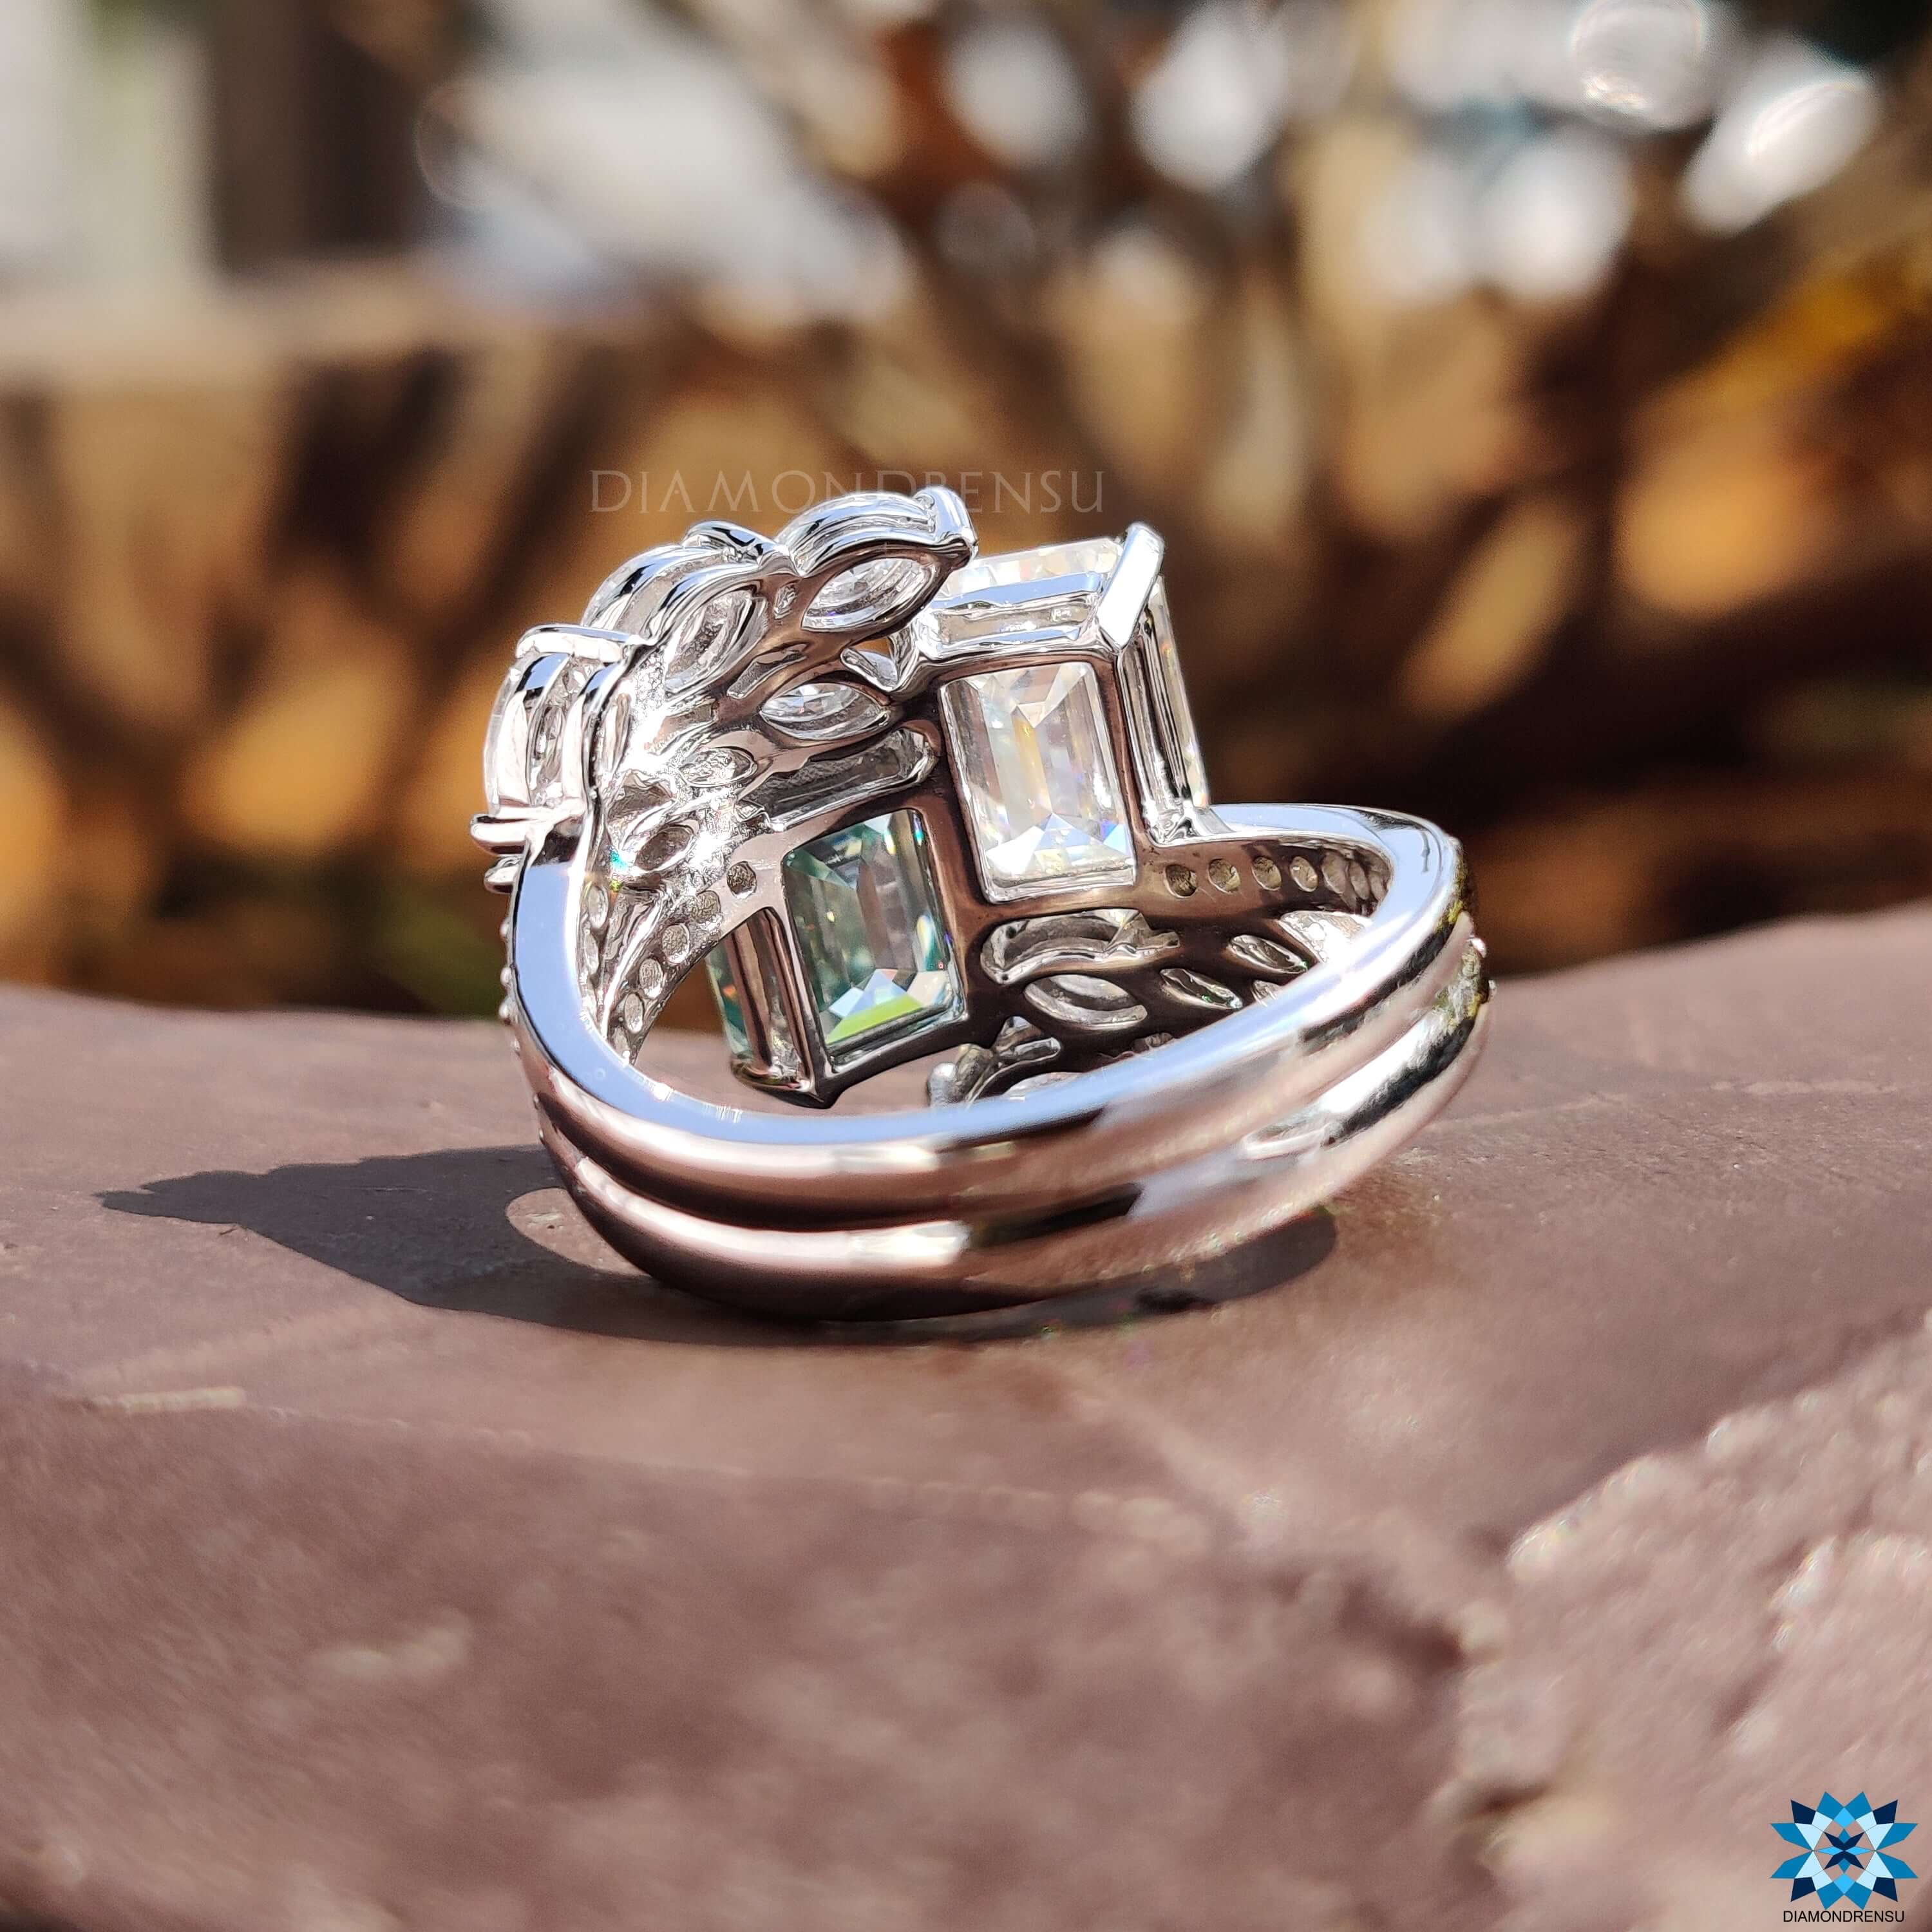 vintage moissanite ring - diamondrensu